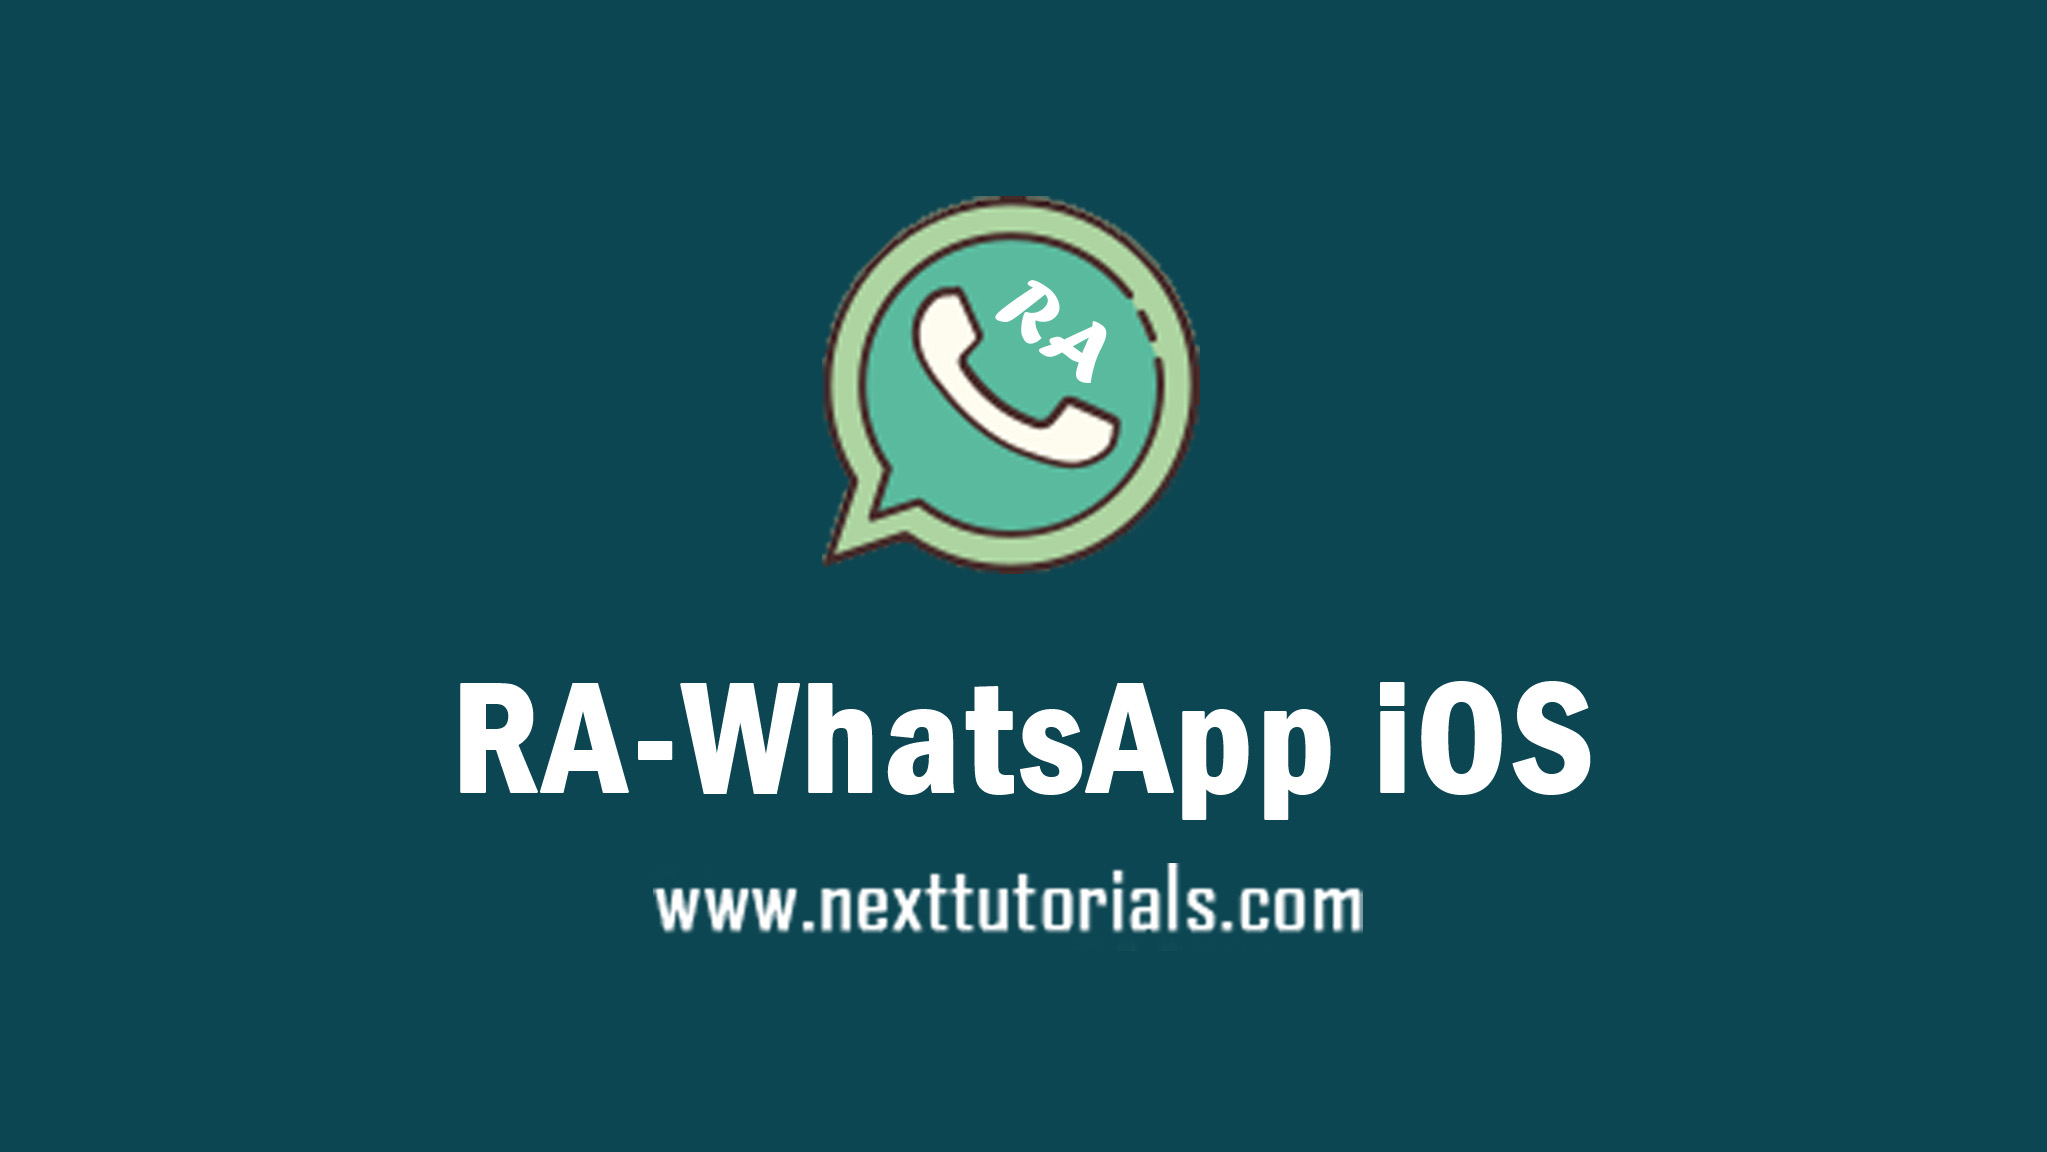 RAWhatsApp iOS v8.51 APK MOD Update Tampilan Terbaru 2020 Next Tutorials